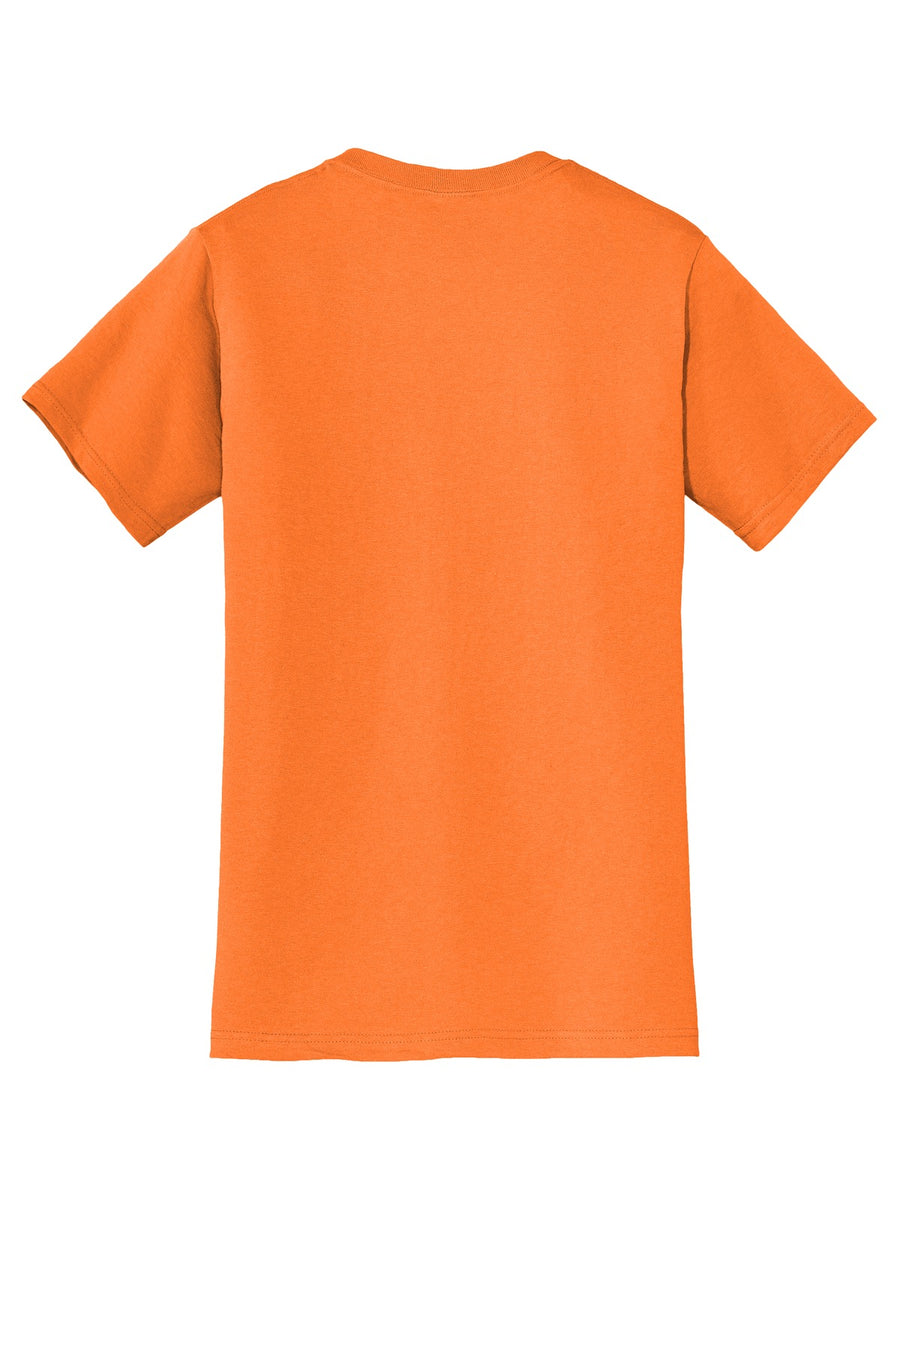 29MP-Safety Orange-back_flat